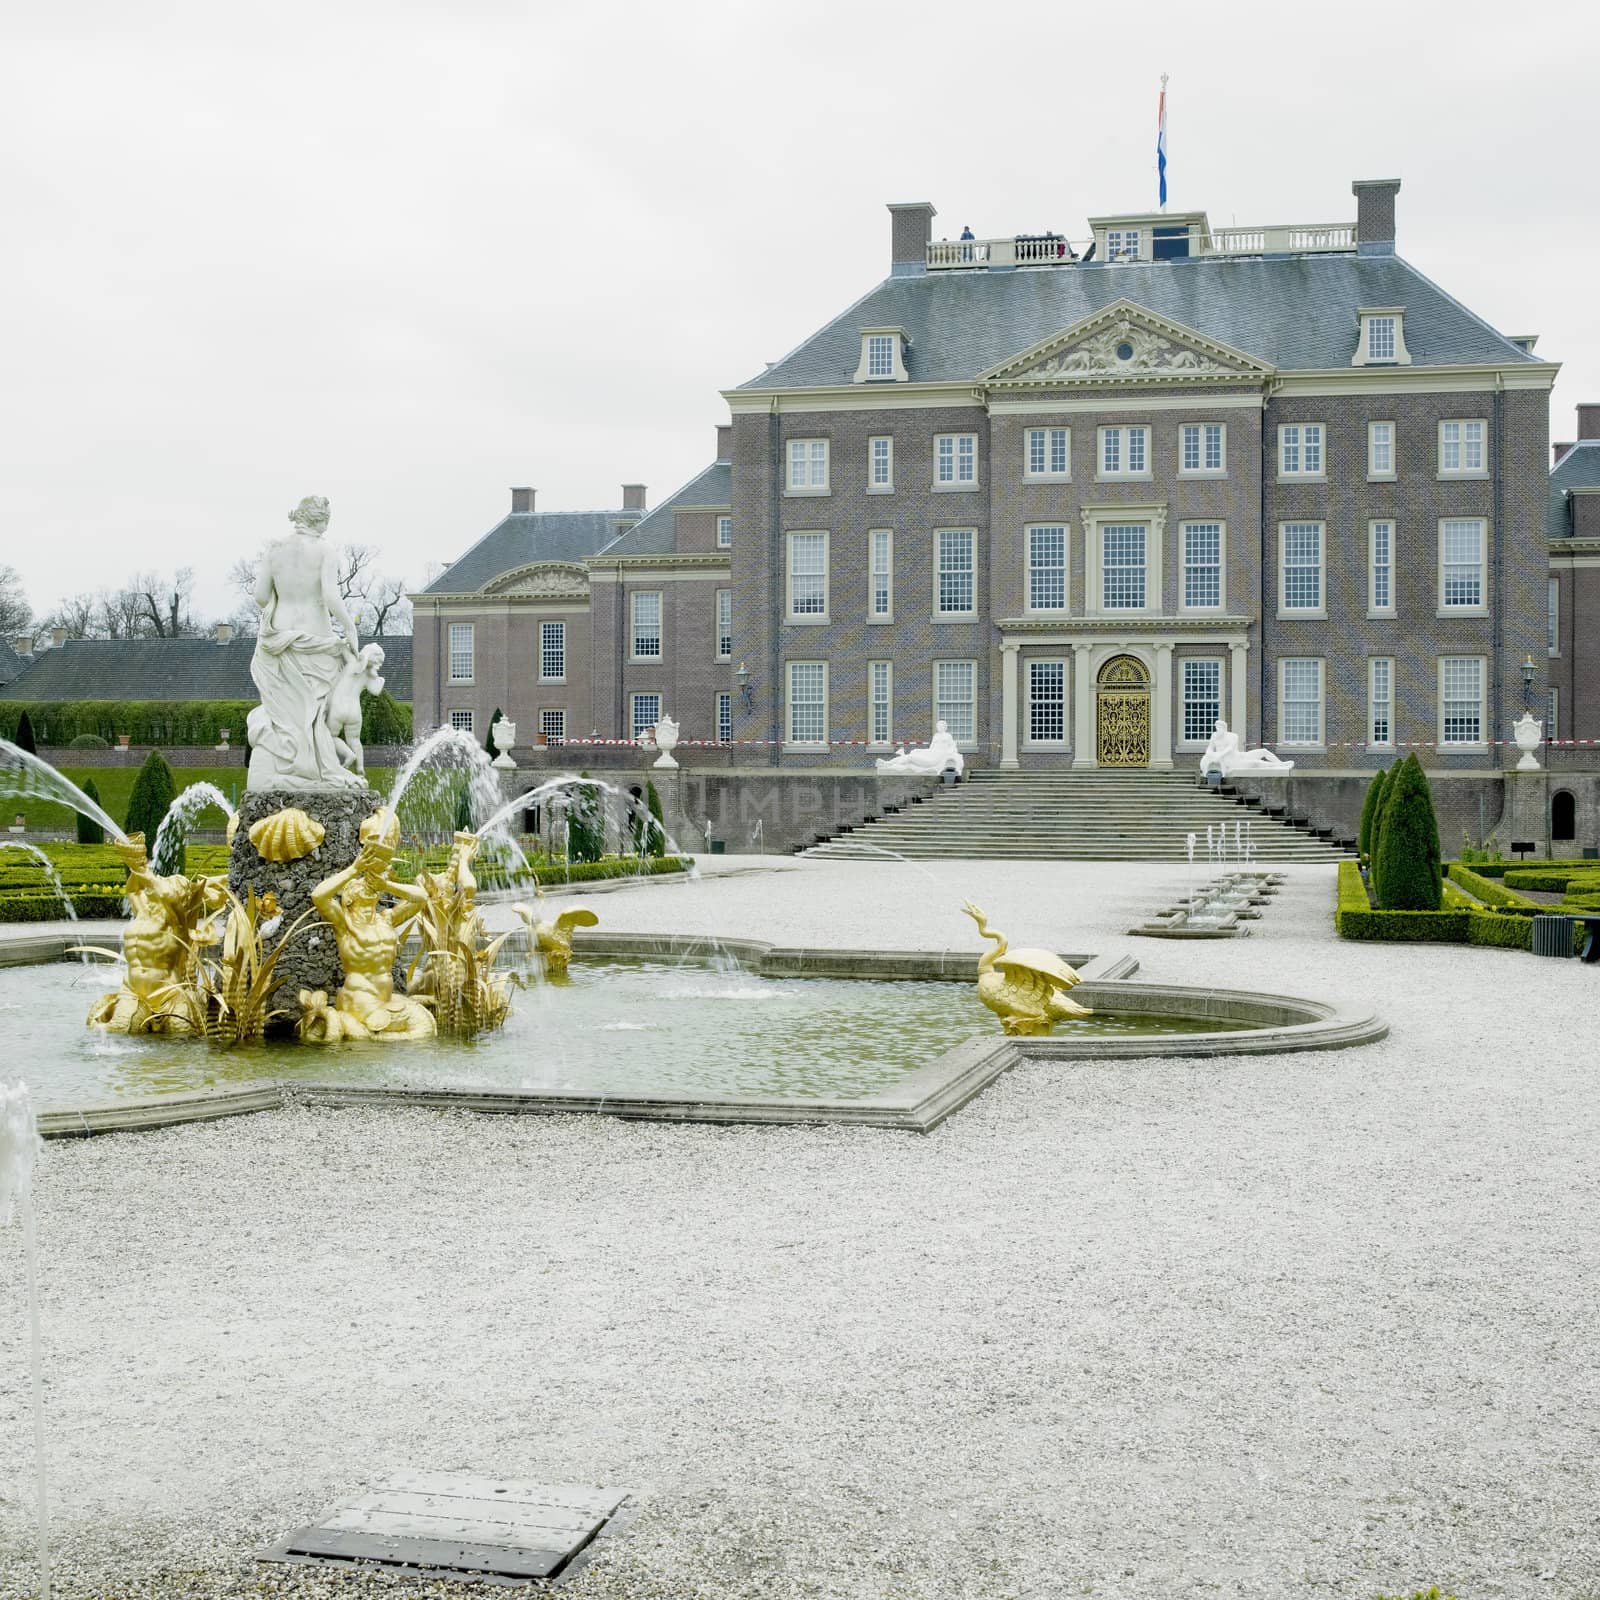 palace and gardens, Paleis Het Loo Castle near Apeldoorn, Netherlands